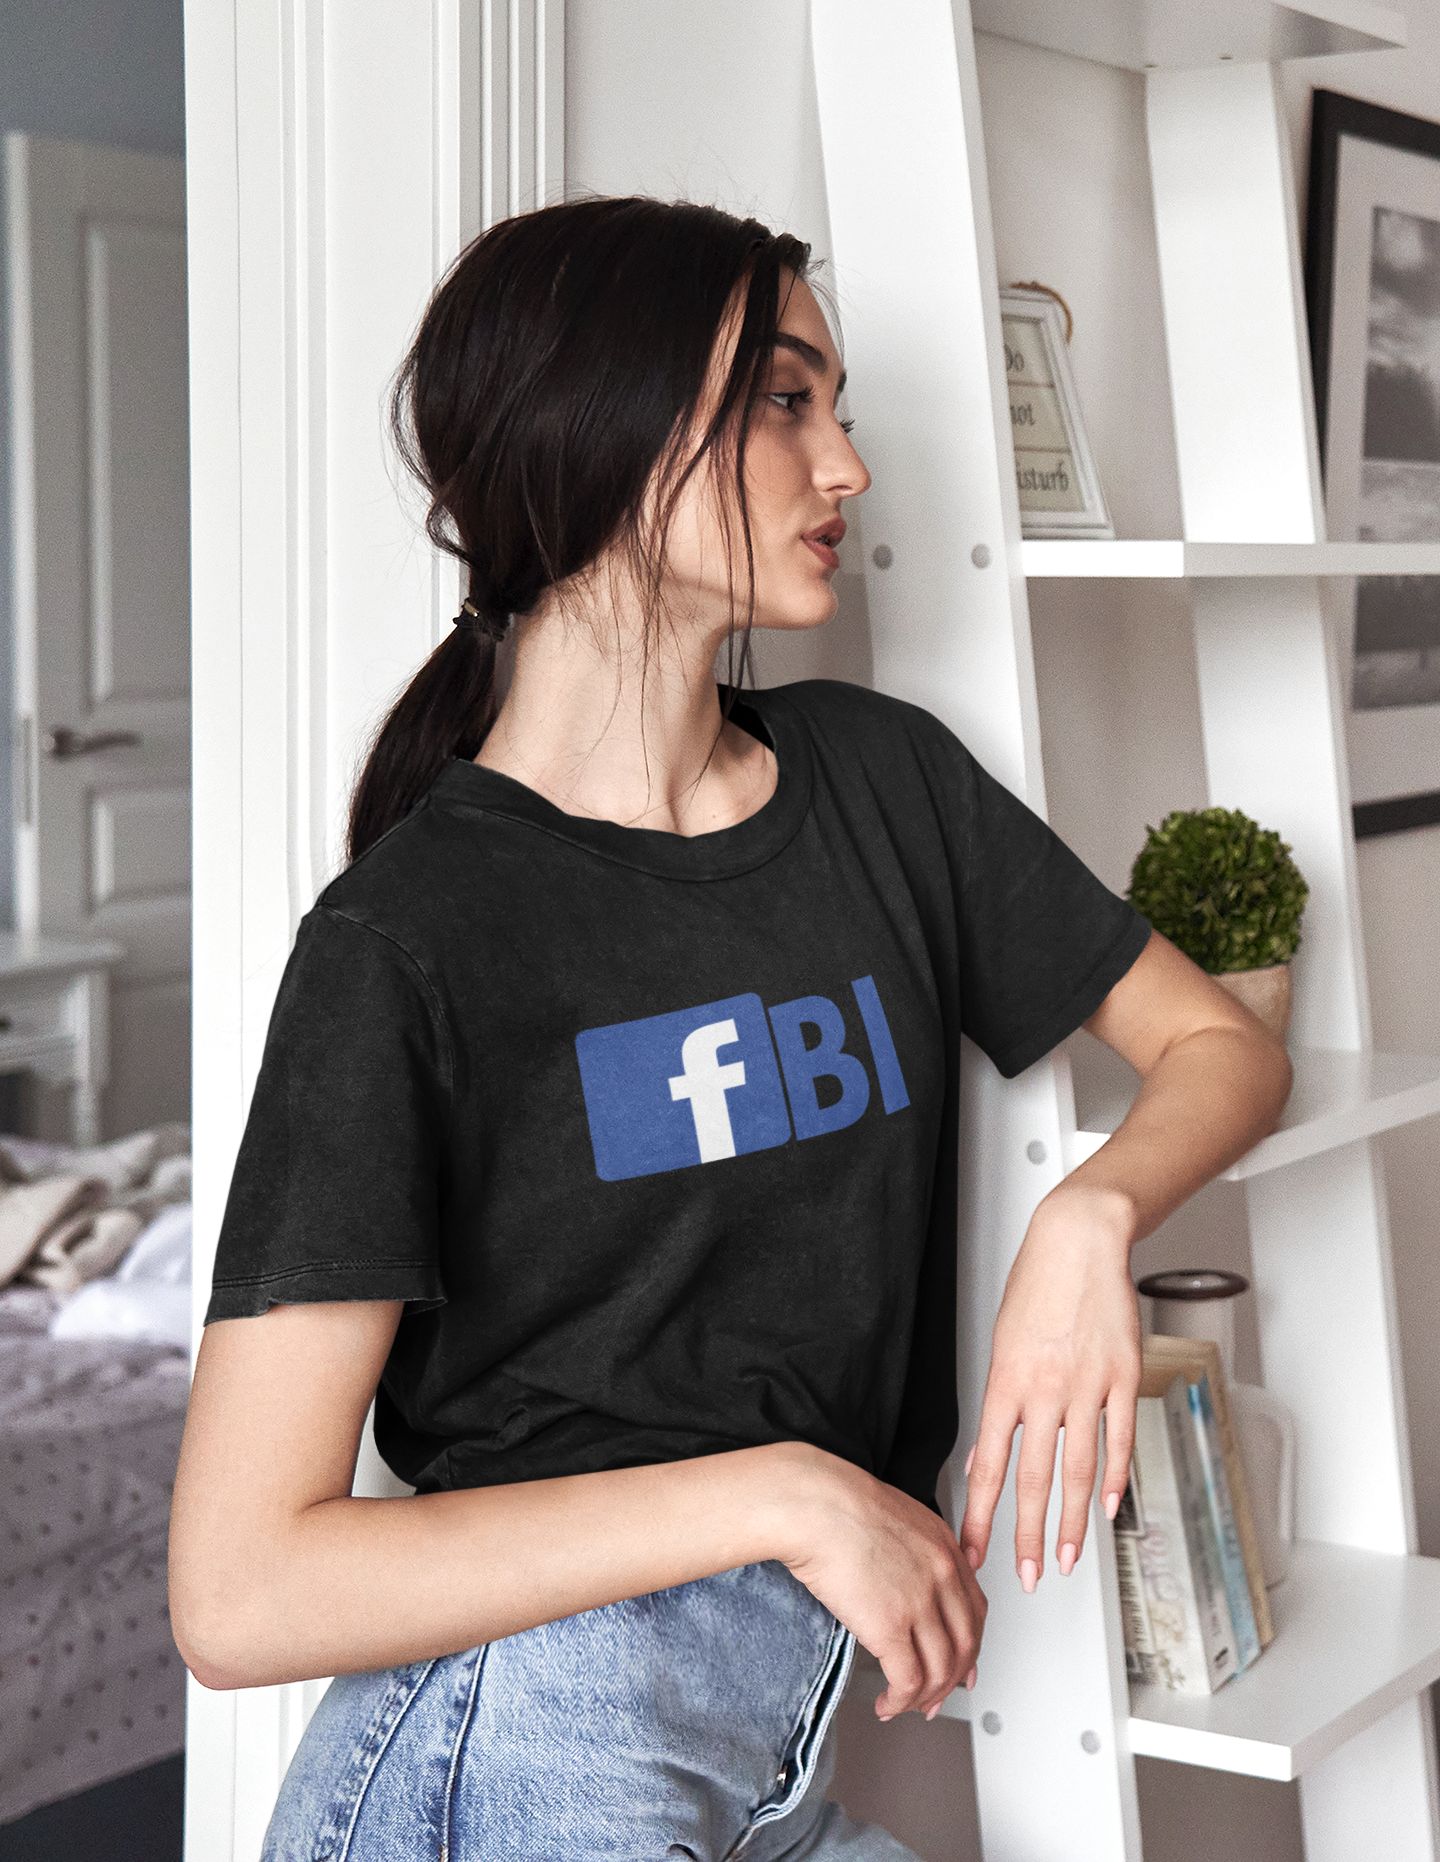 FB/FBI T-Shirt Women